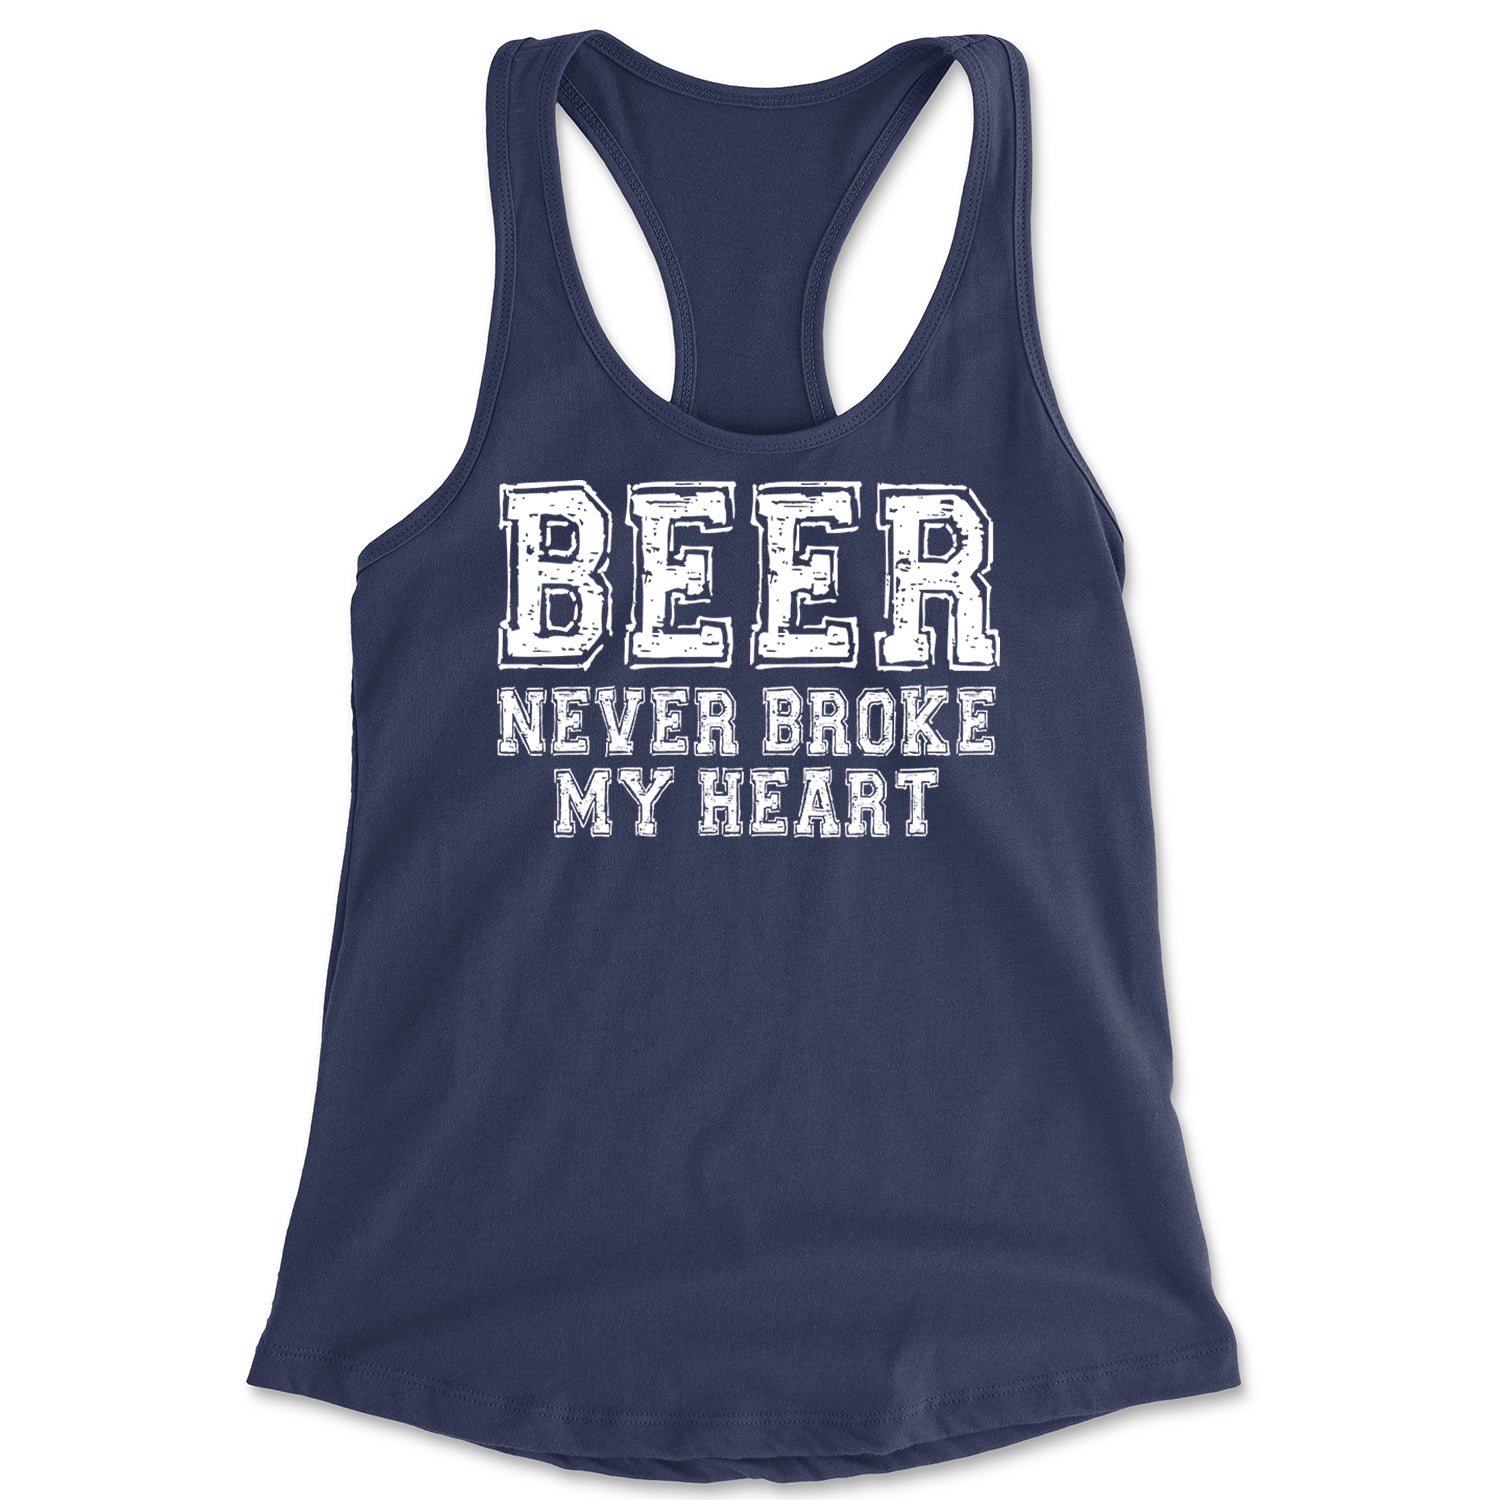 Beer Never Broke My Heart Funny Drinking Racerback Tank Top for Women